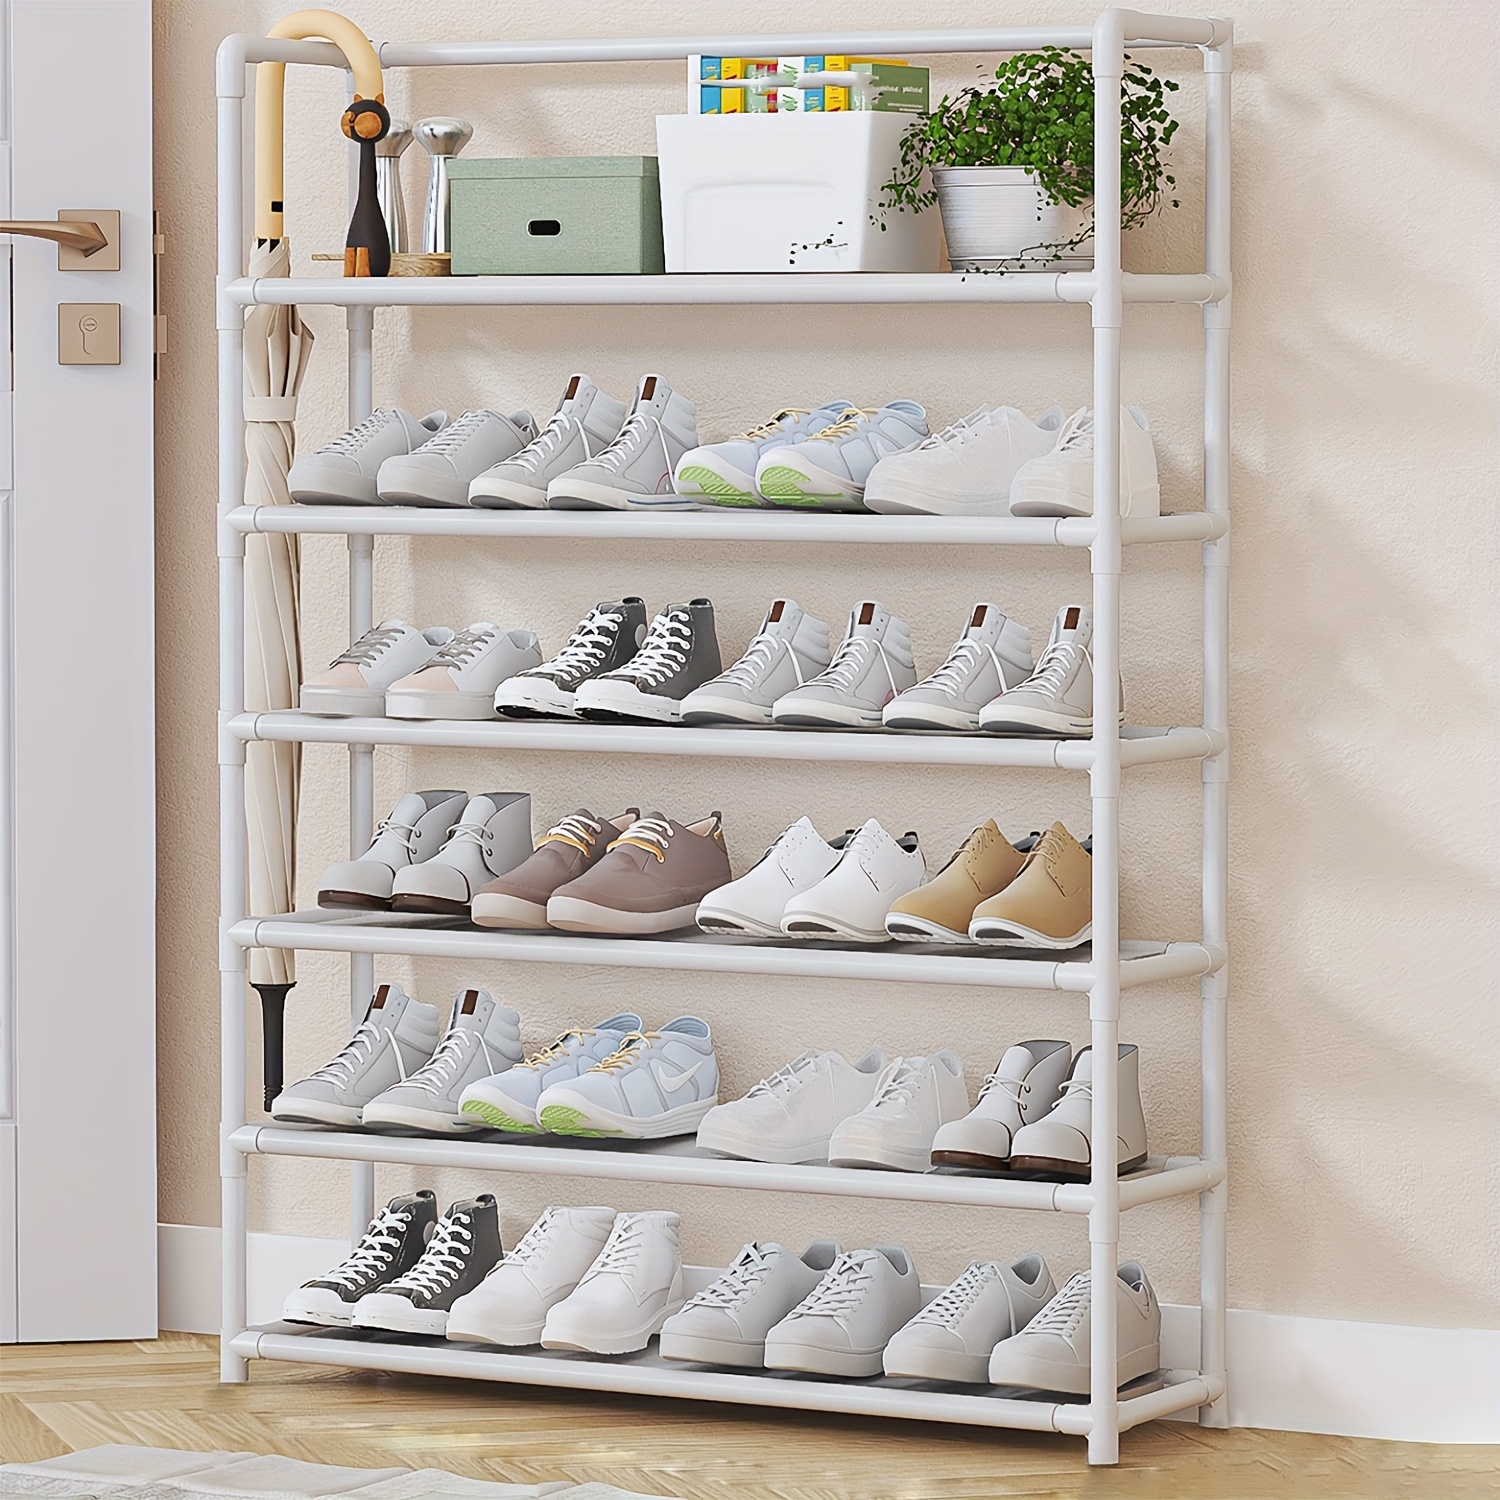 Simple Shoe Rack at The Door, Multi-Layer Storage Shelf, Home